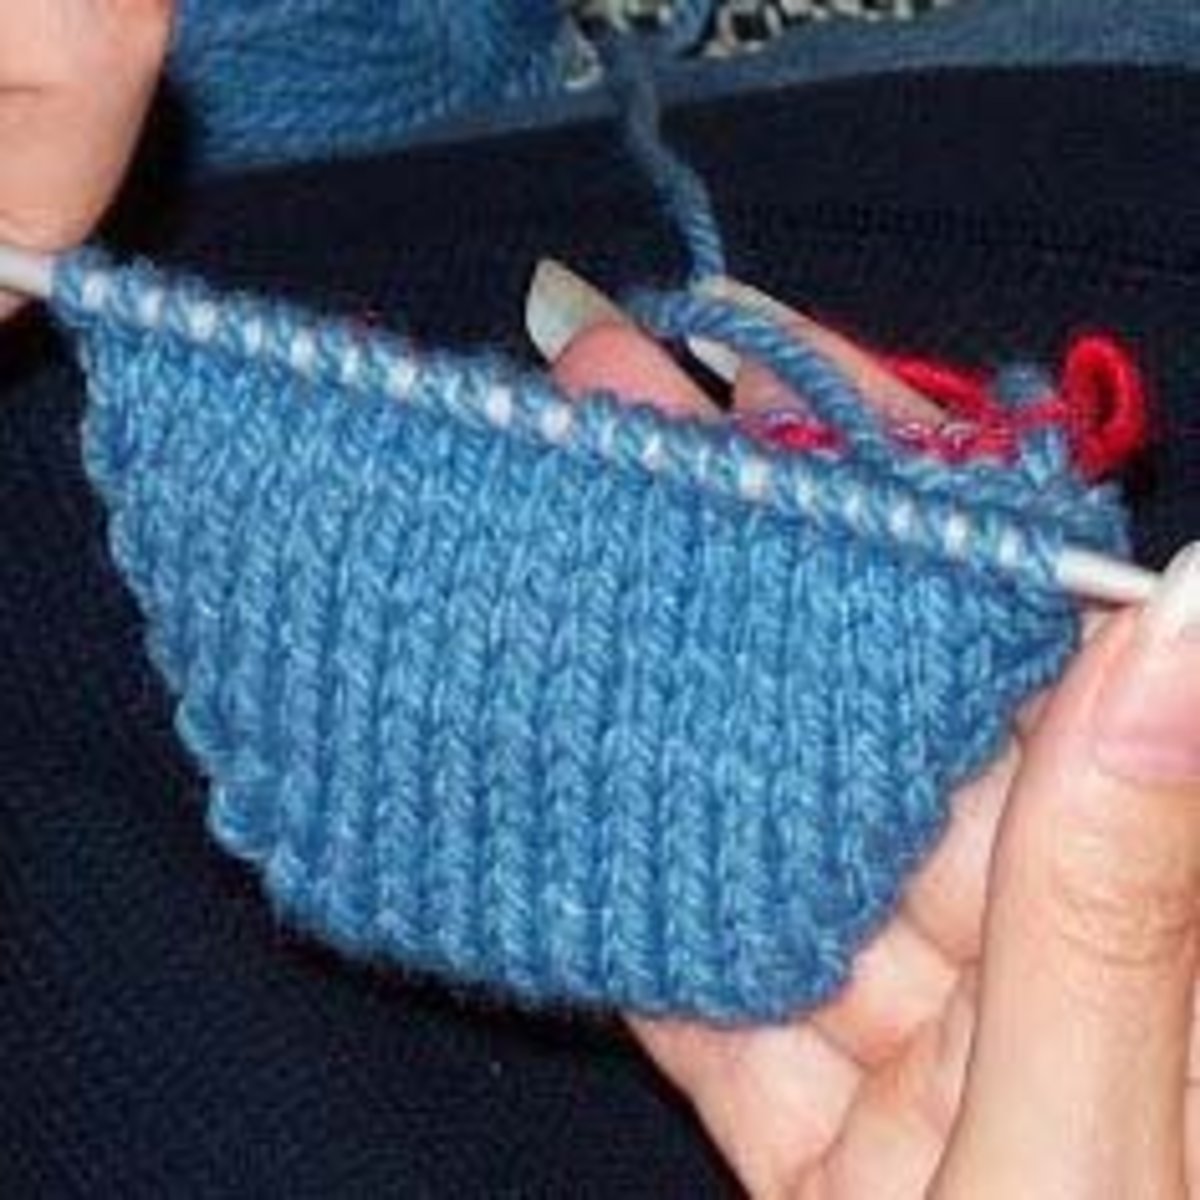 knitting-socks-and-free-patterns